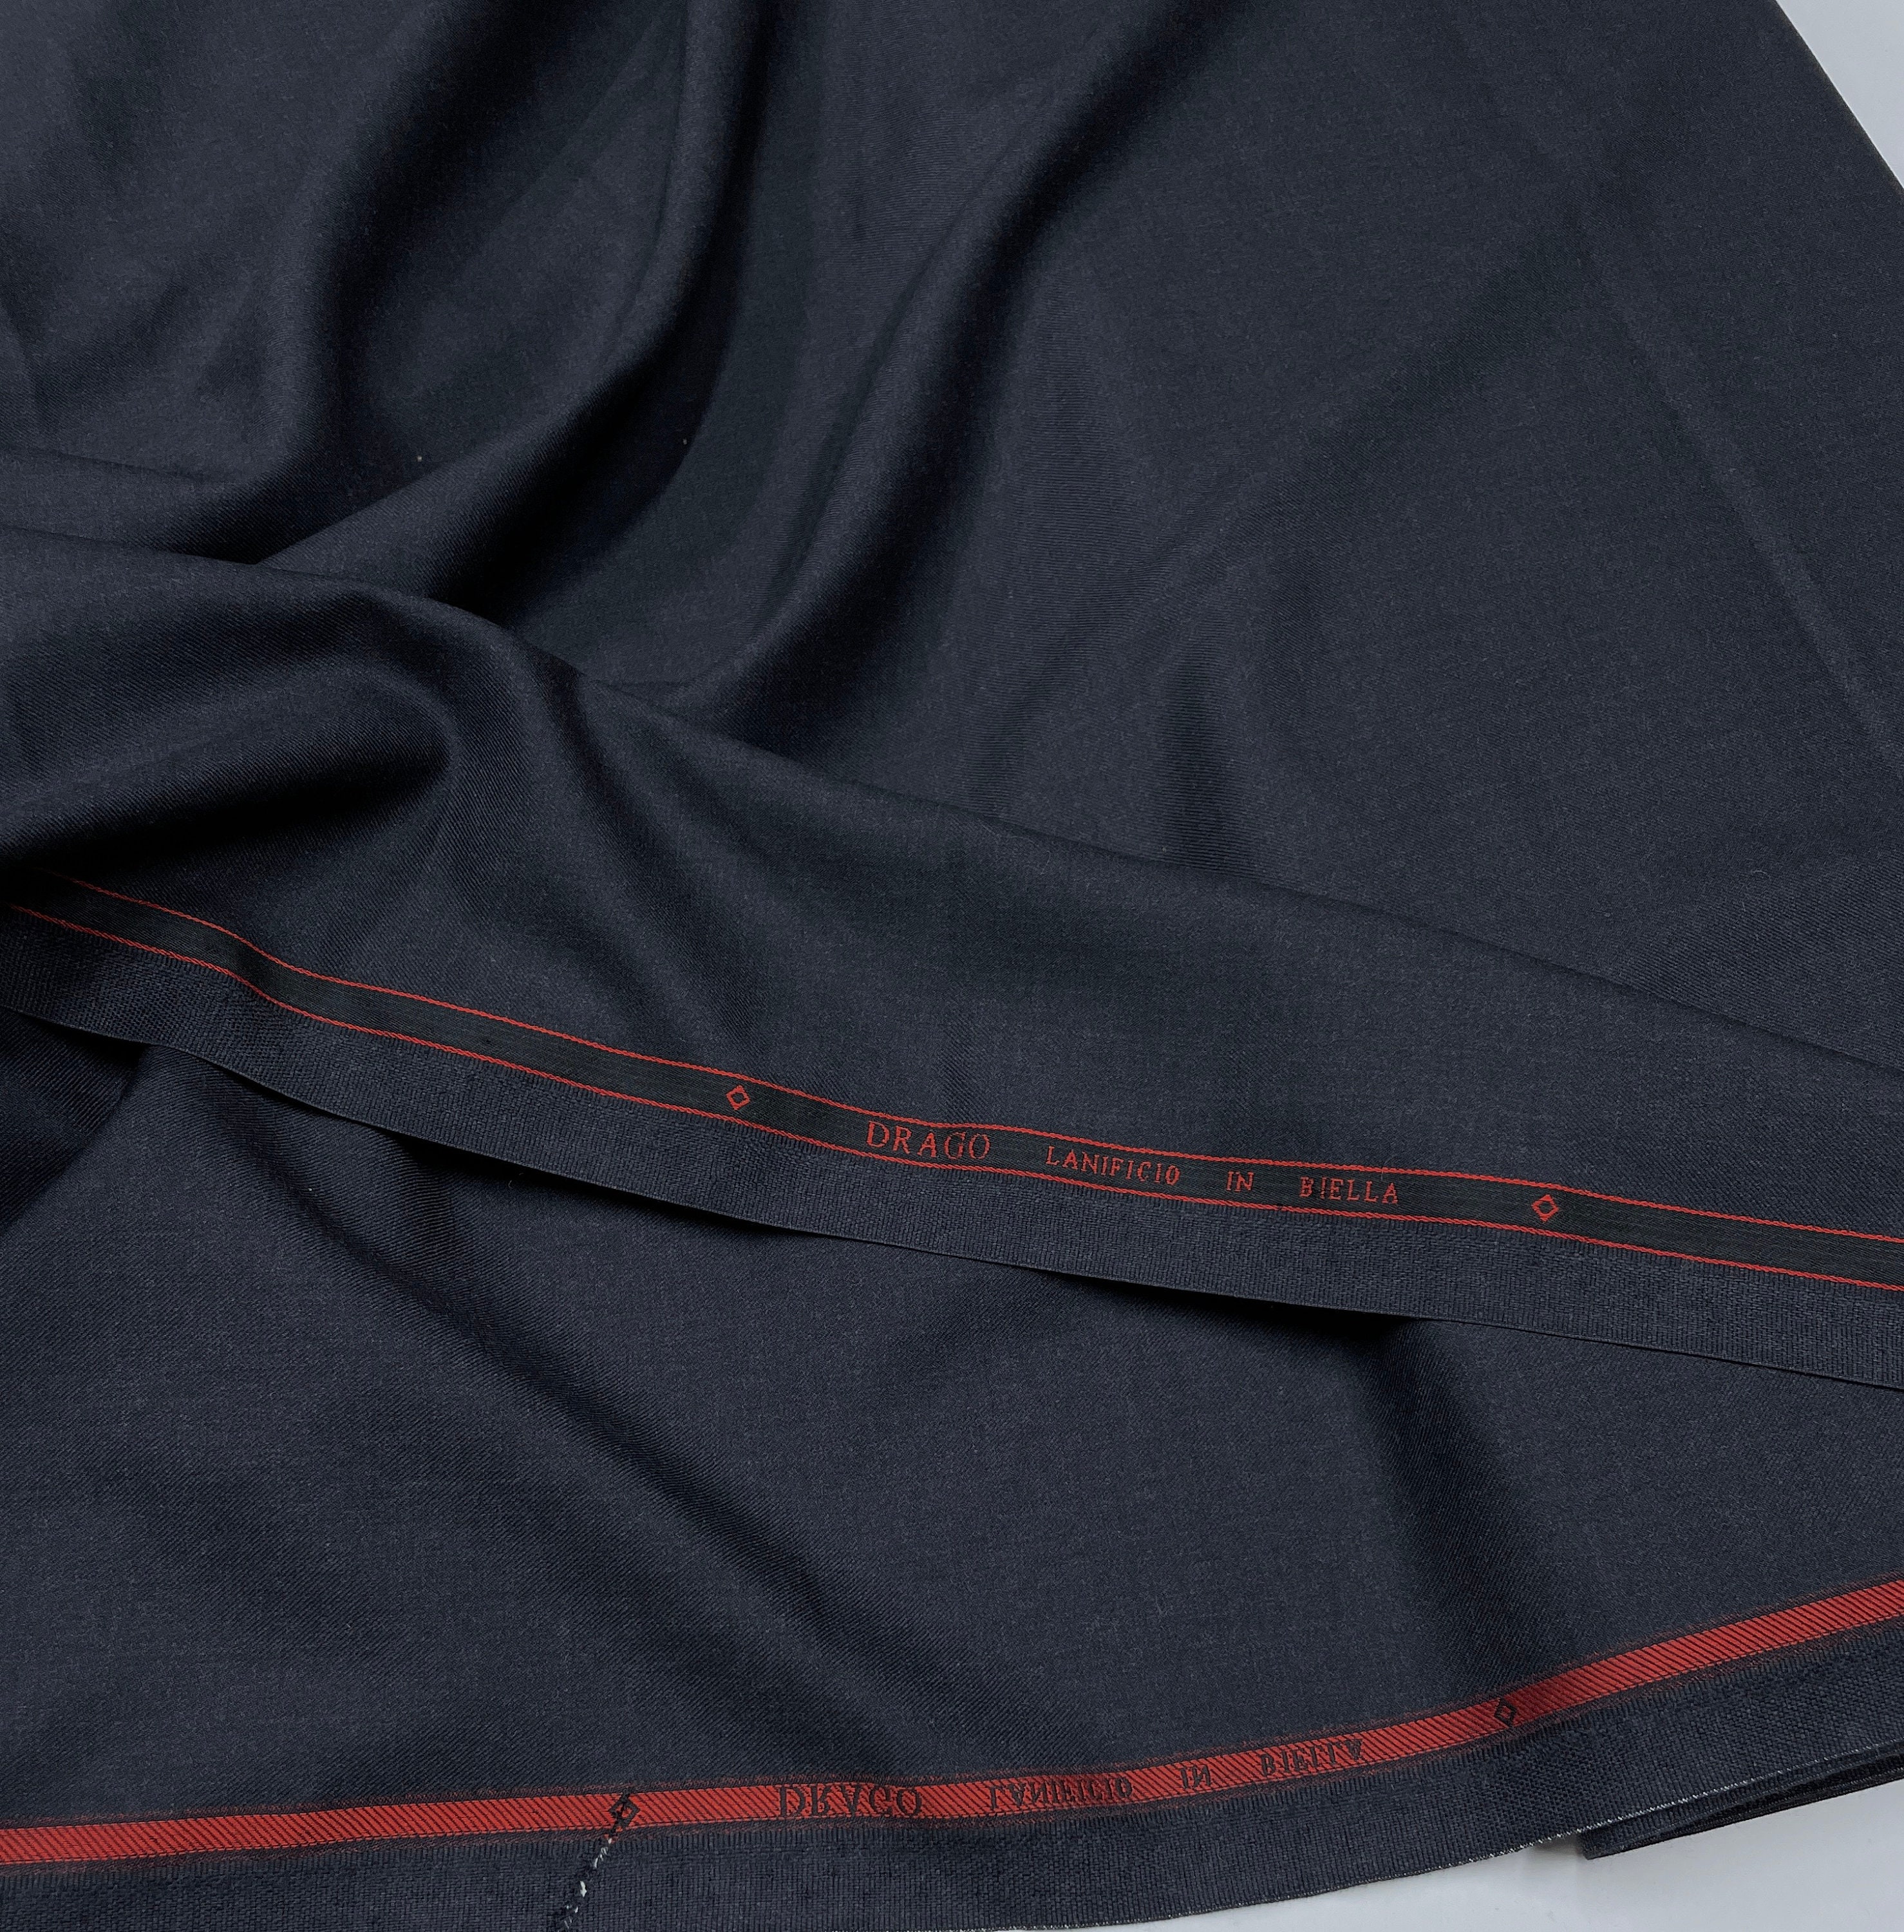 Premium Australian Merino Wool Blended Colour Plain Pants Fabric Black